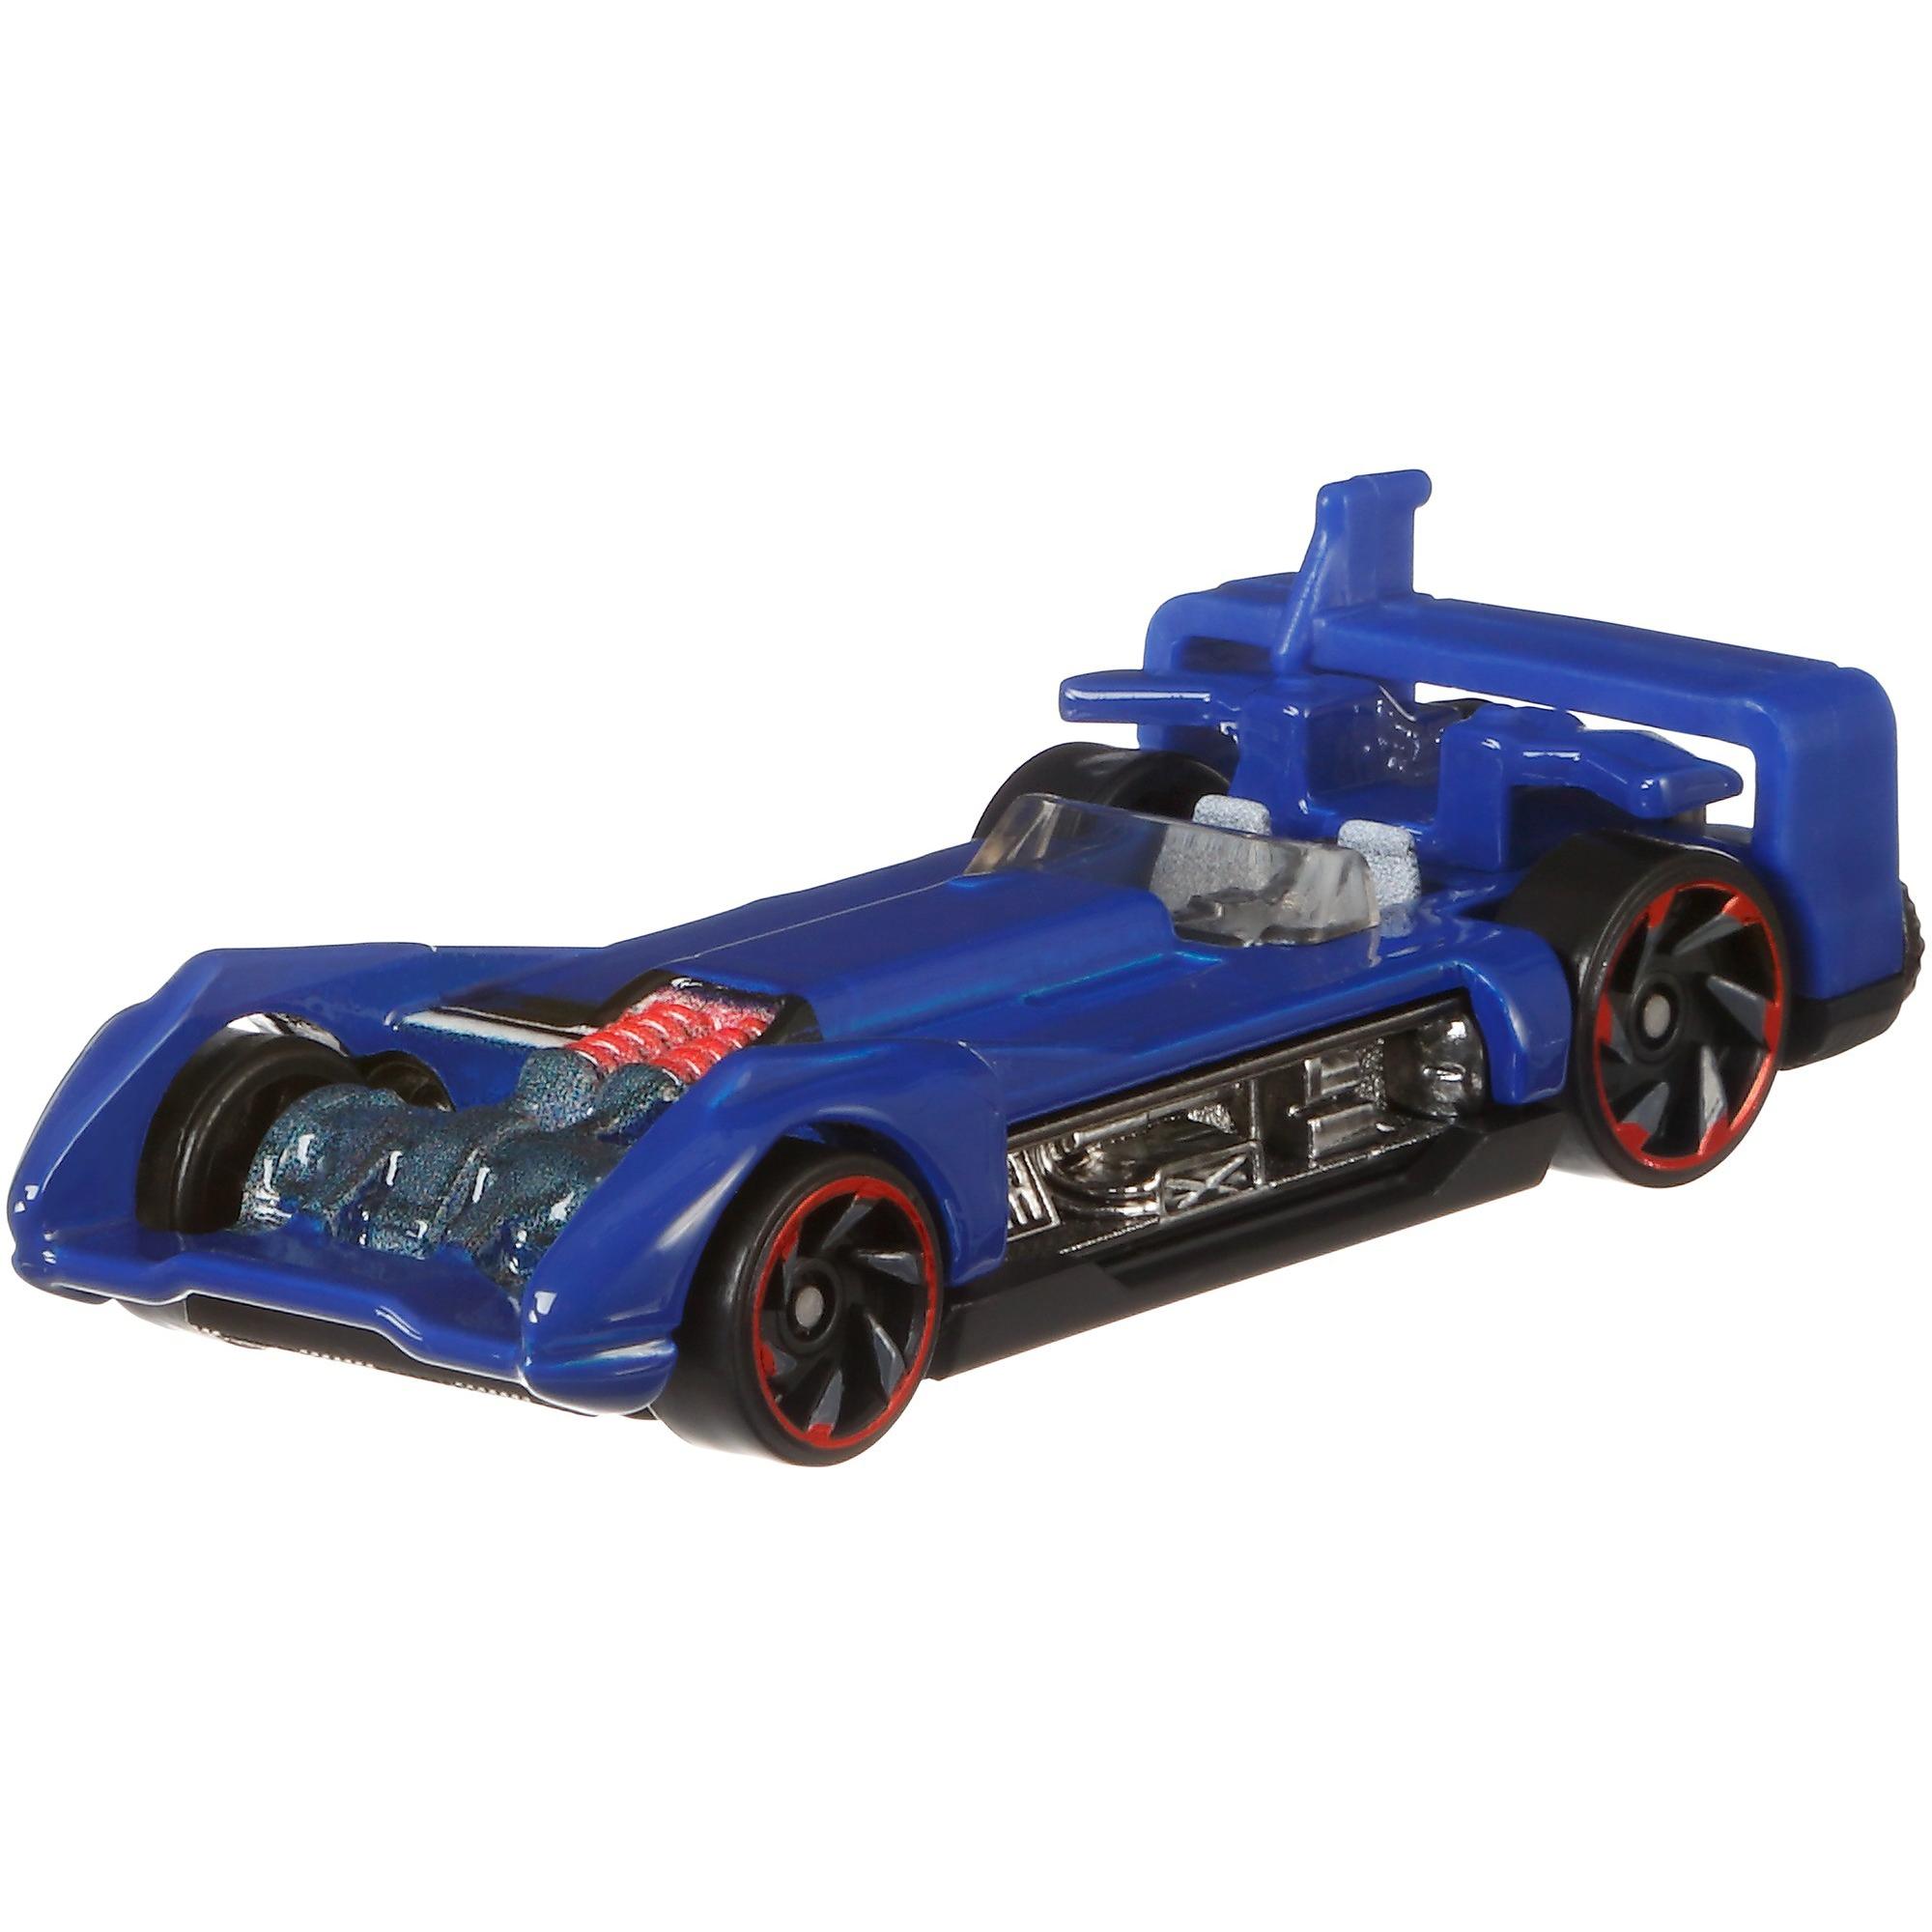 Solo: ASWS HW Han's Speeder Vehicle Car Toy 2